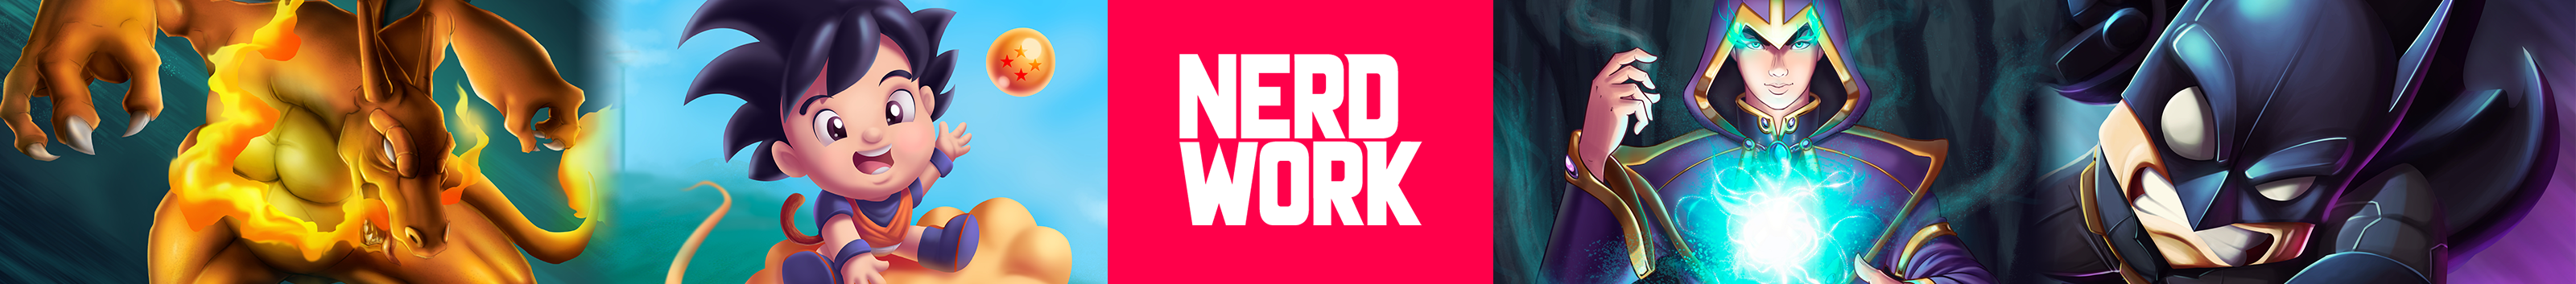 Nerdworker .'s profile banner